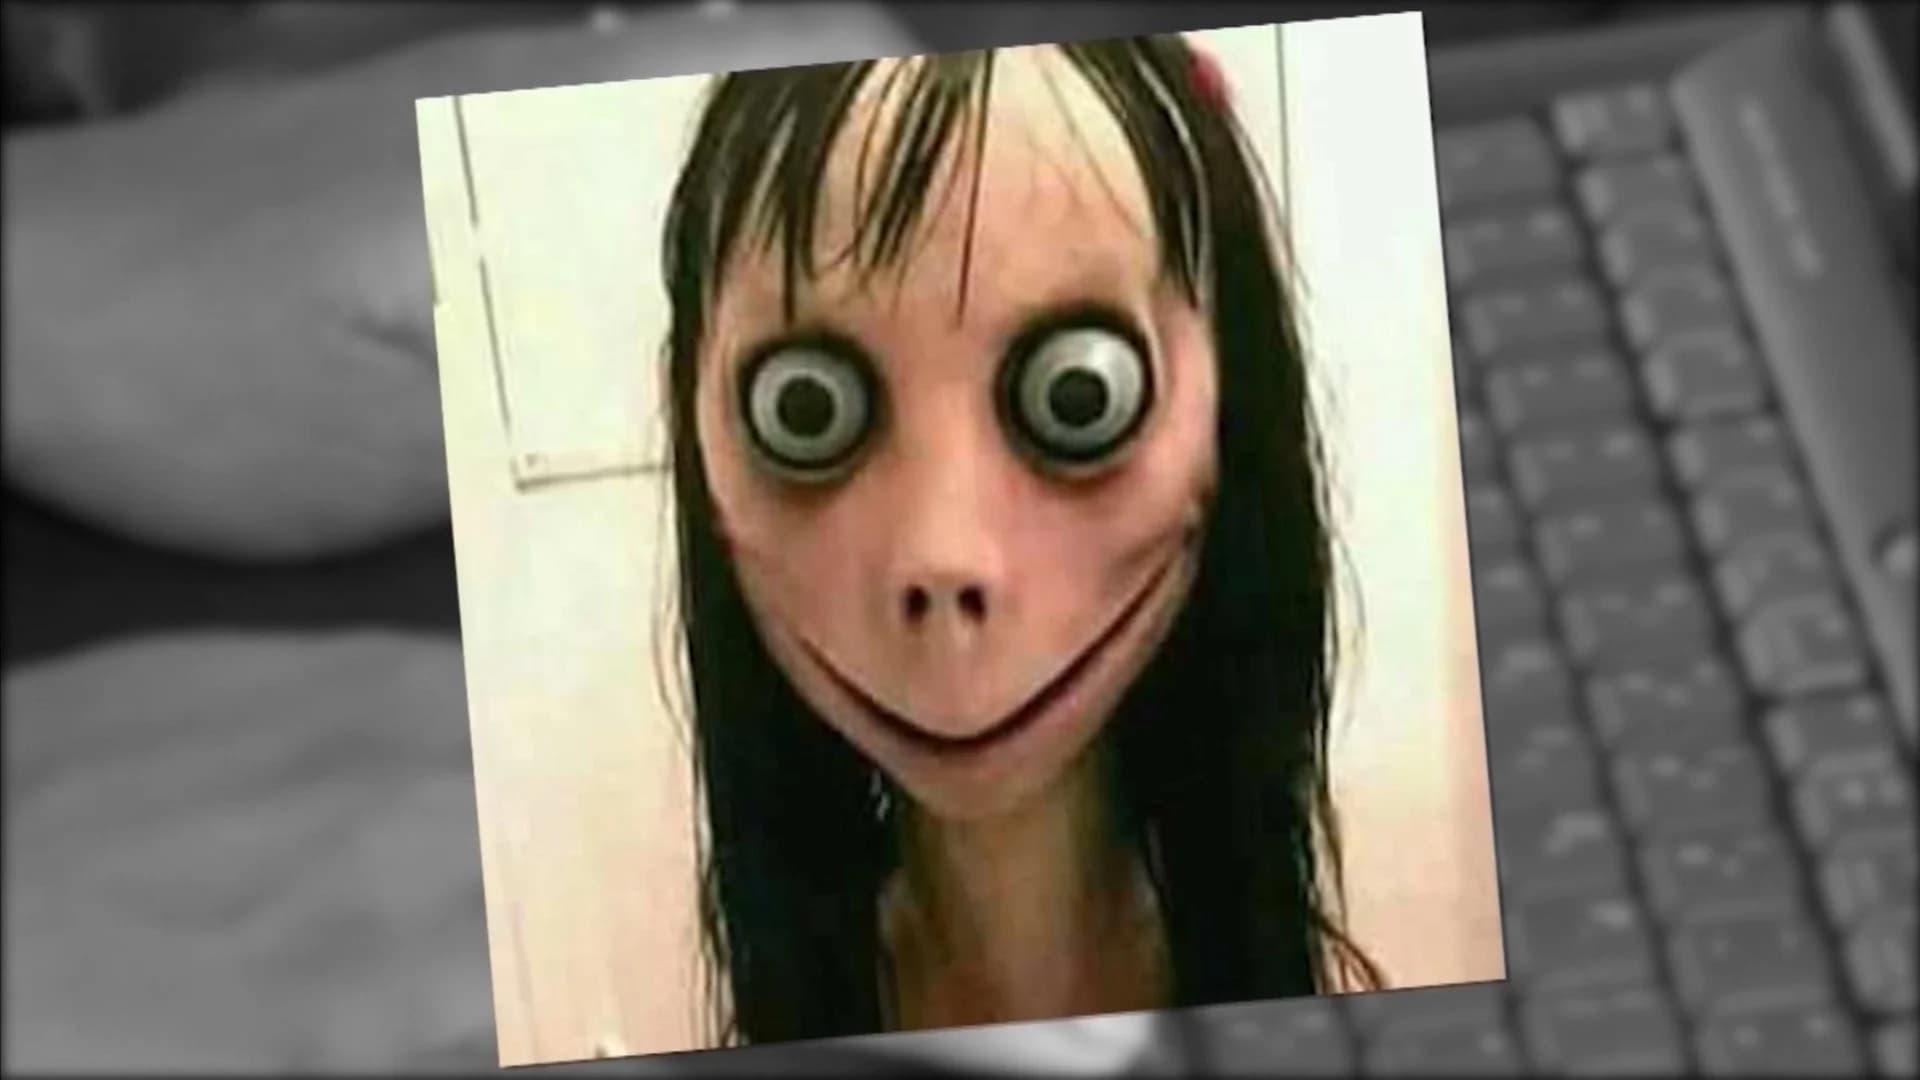 Someone is embedding disturbing images in children’s YouTube videos